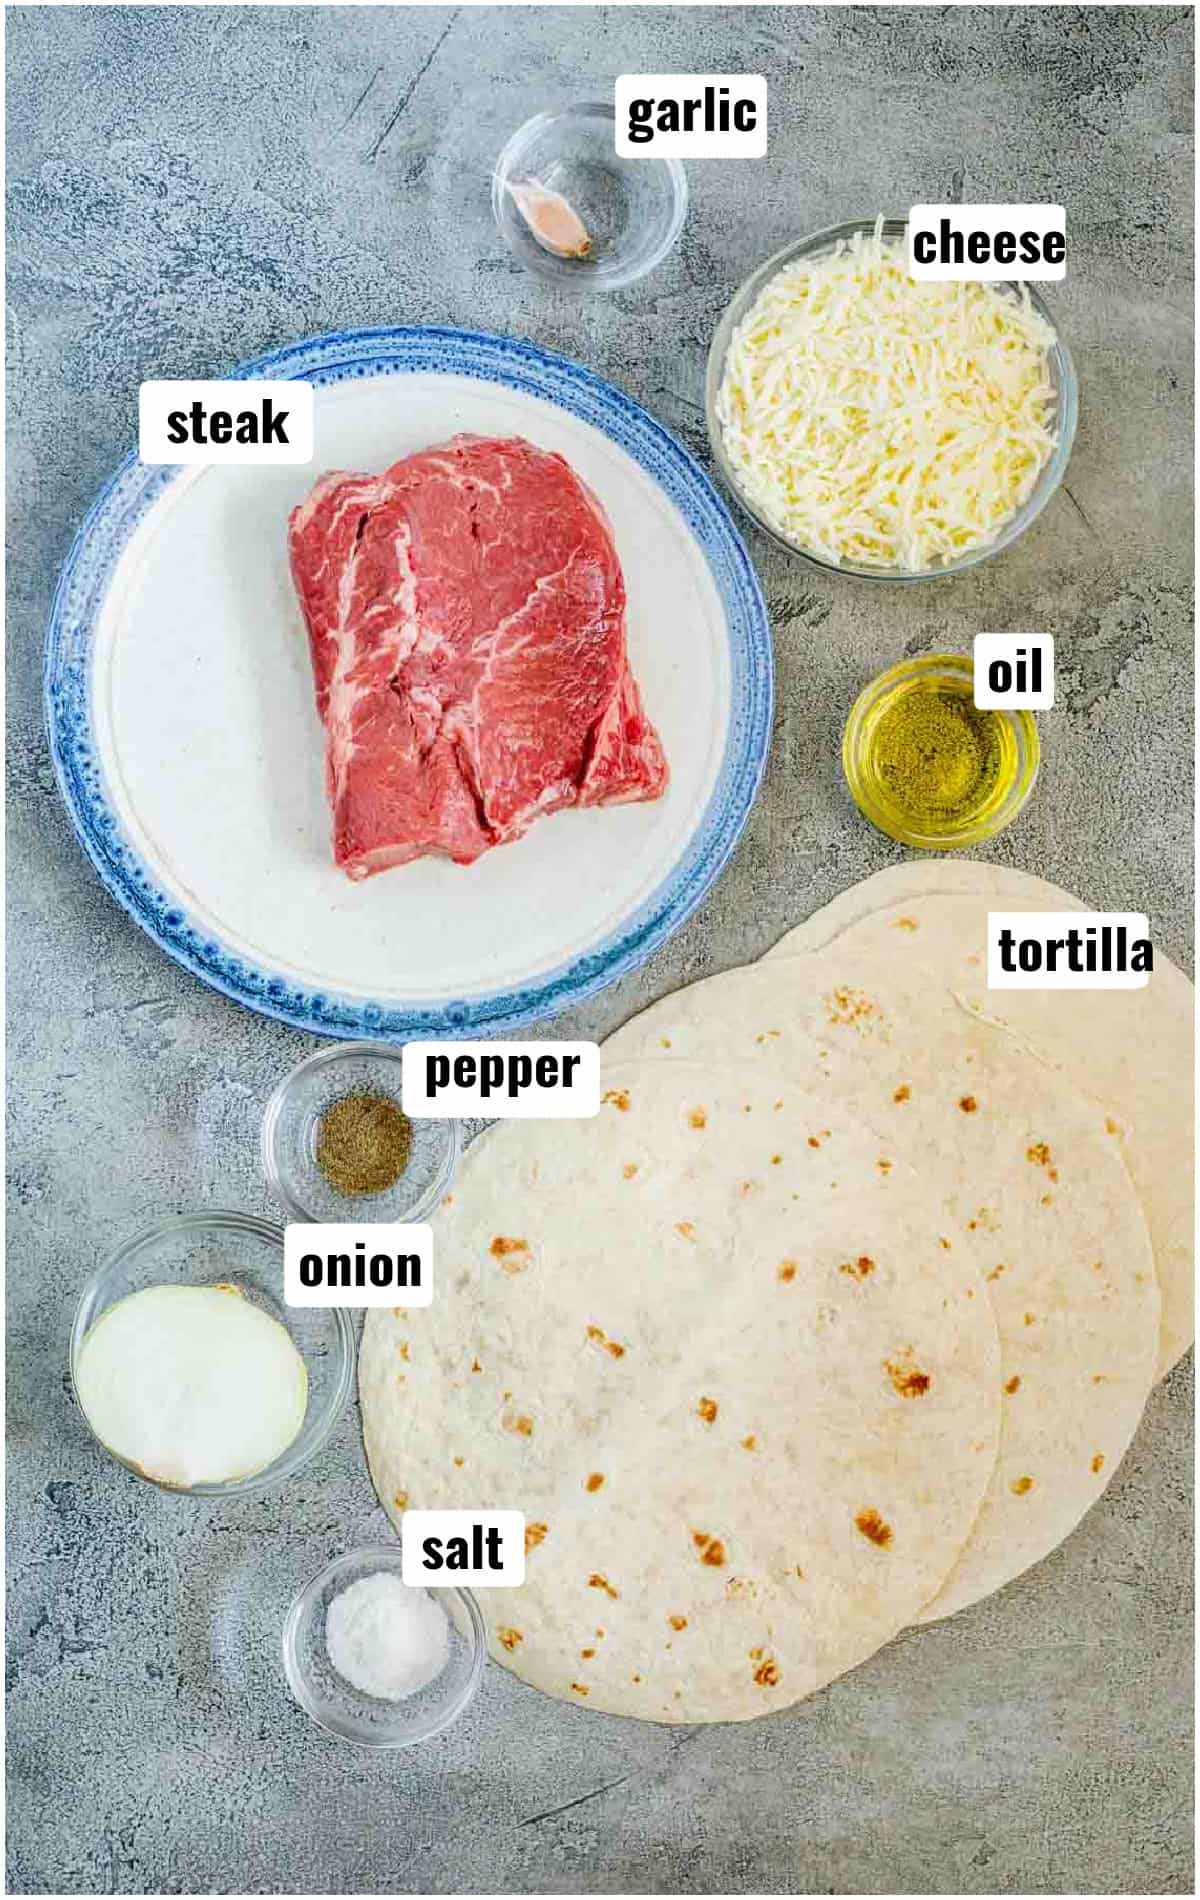 All ingredients needed for steak quesadillas.